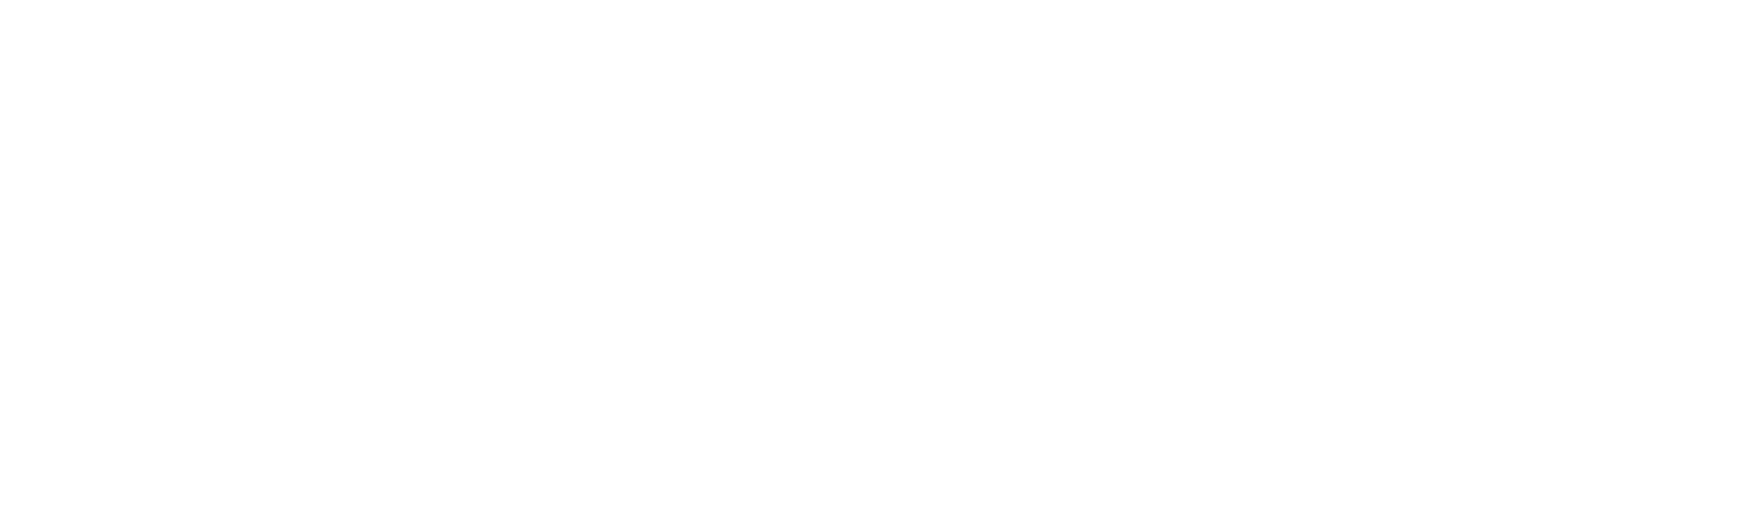 Dundas Data Visualization Logo